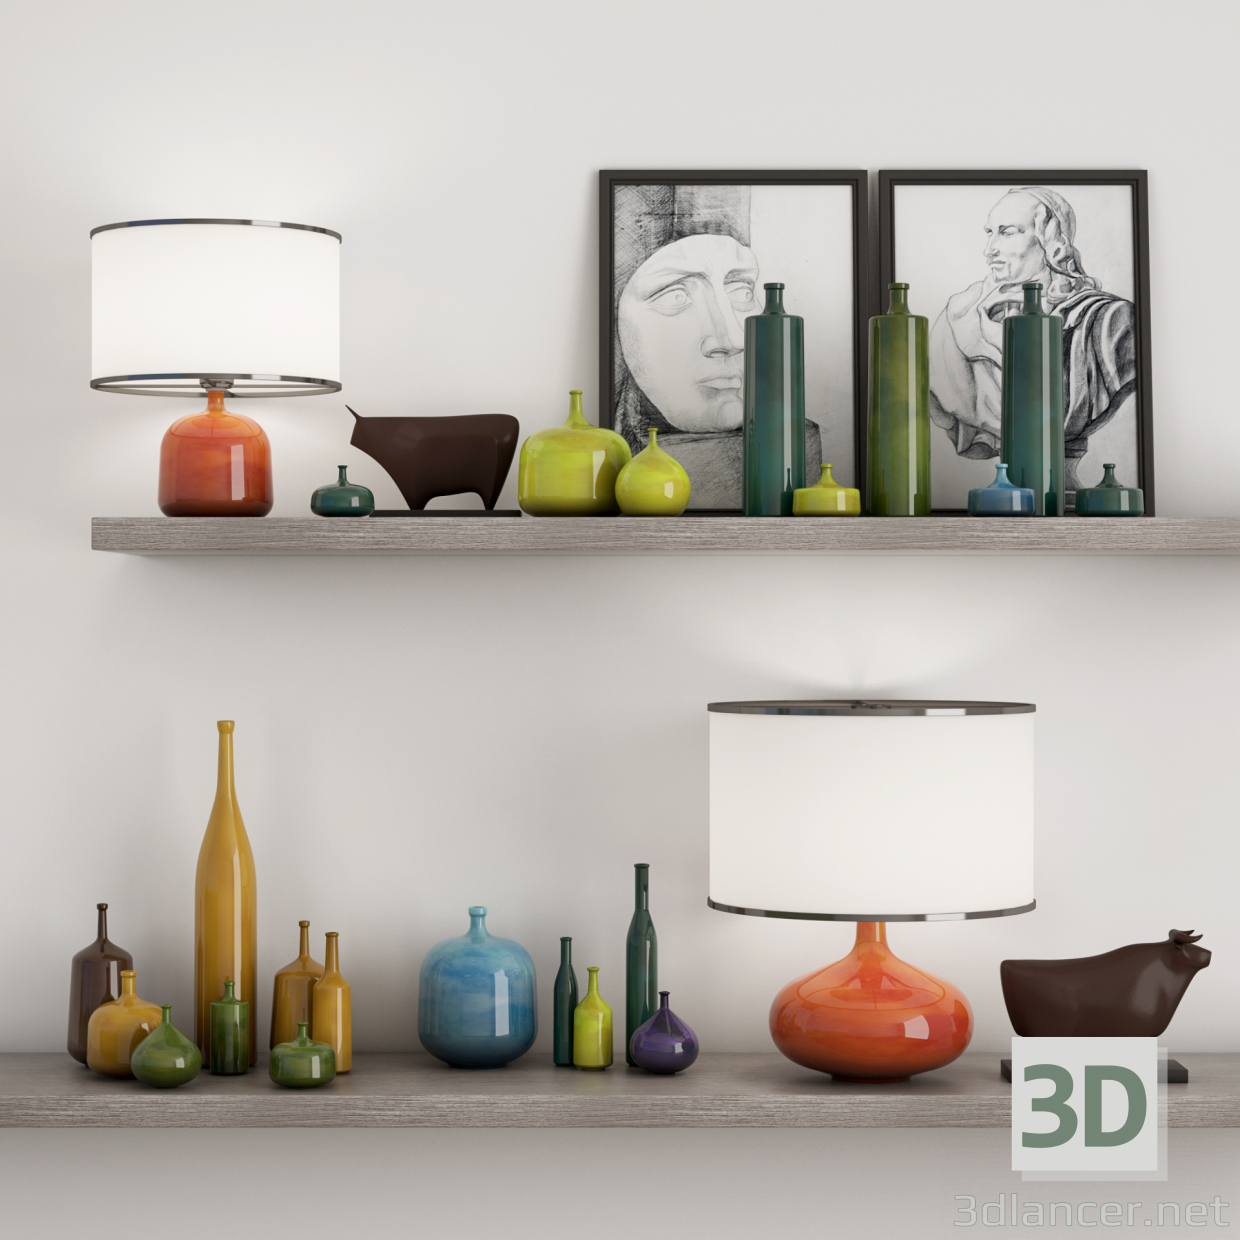 modello 3D Scaffali, vasi, quadri, figure - anteprima